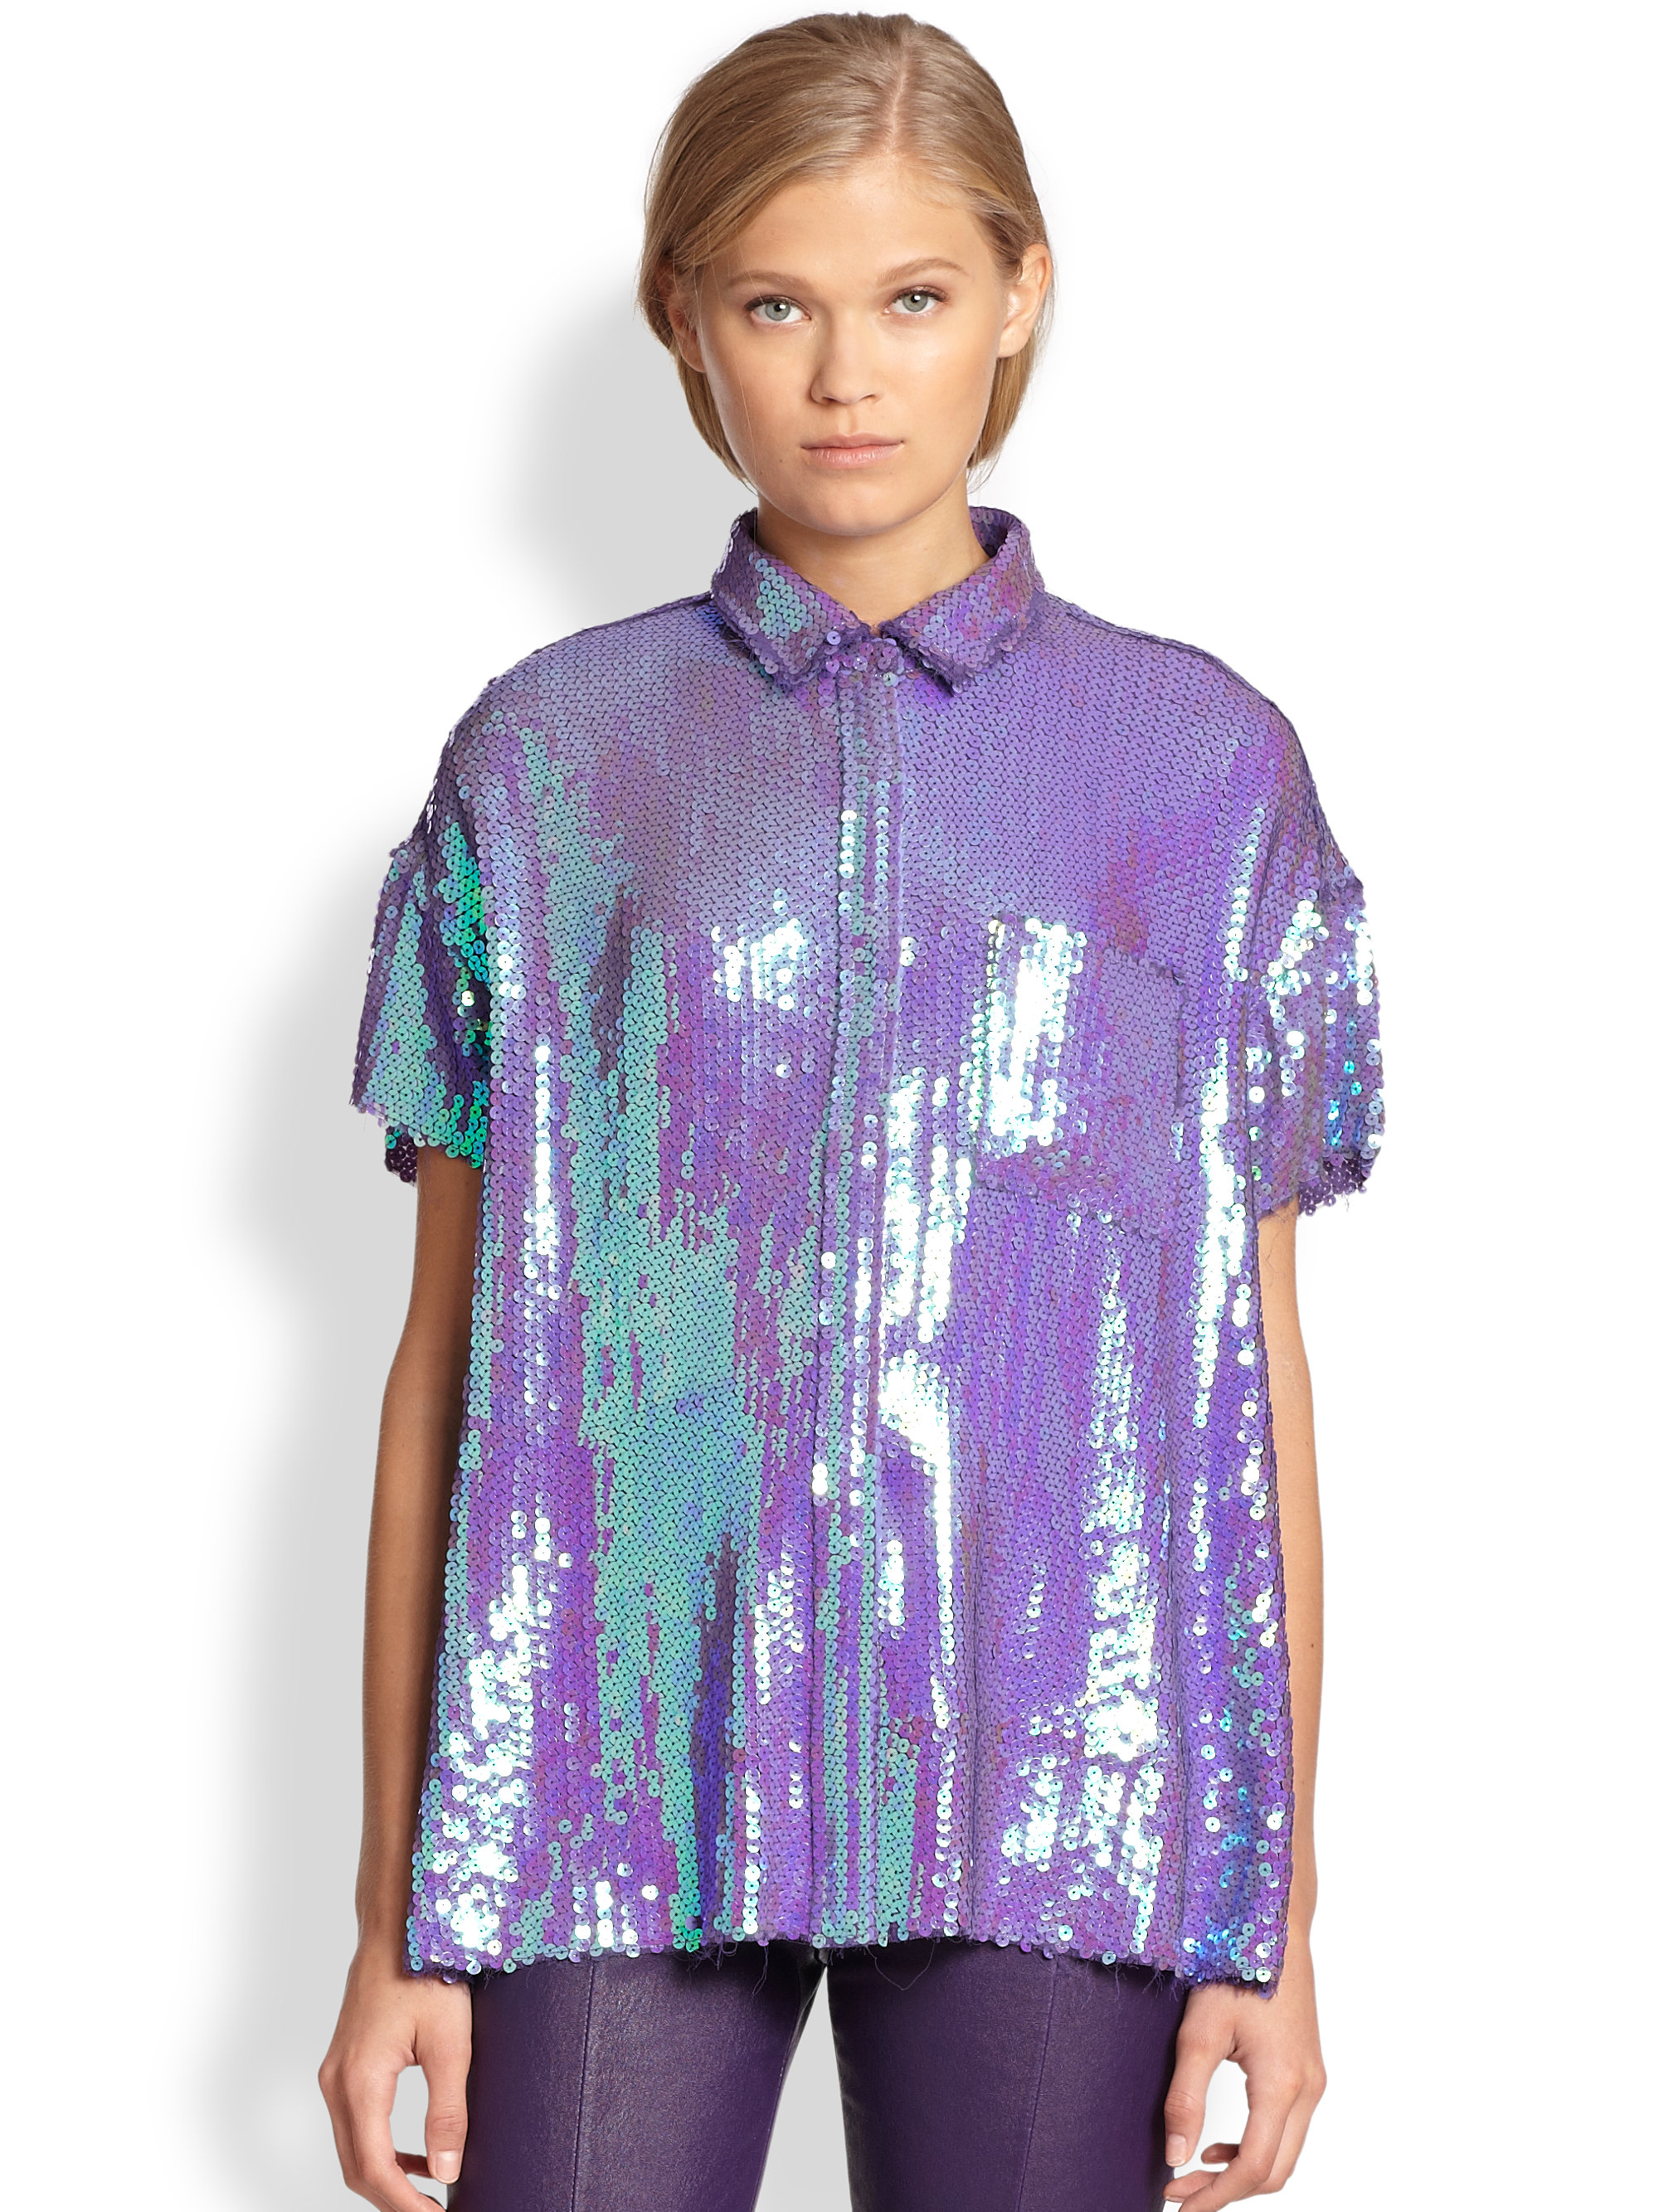 Lyst - Acne Studios Rogue Silk Iridescent Sequined Shirt in Purple